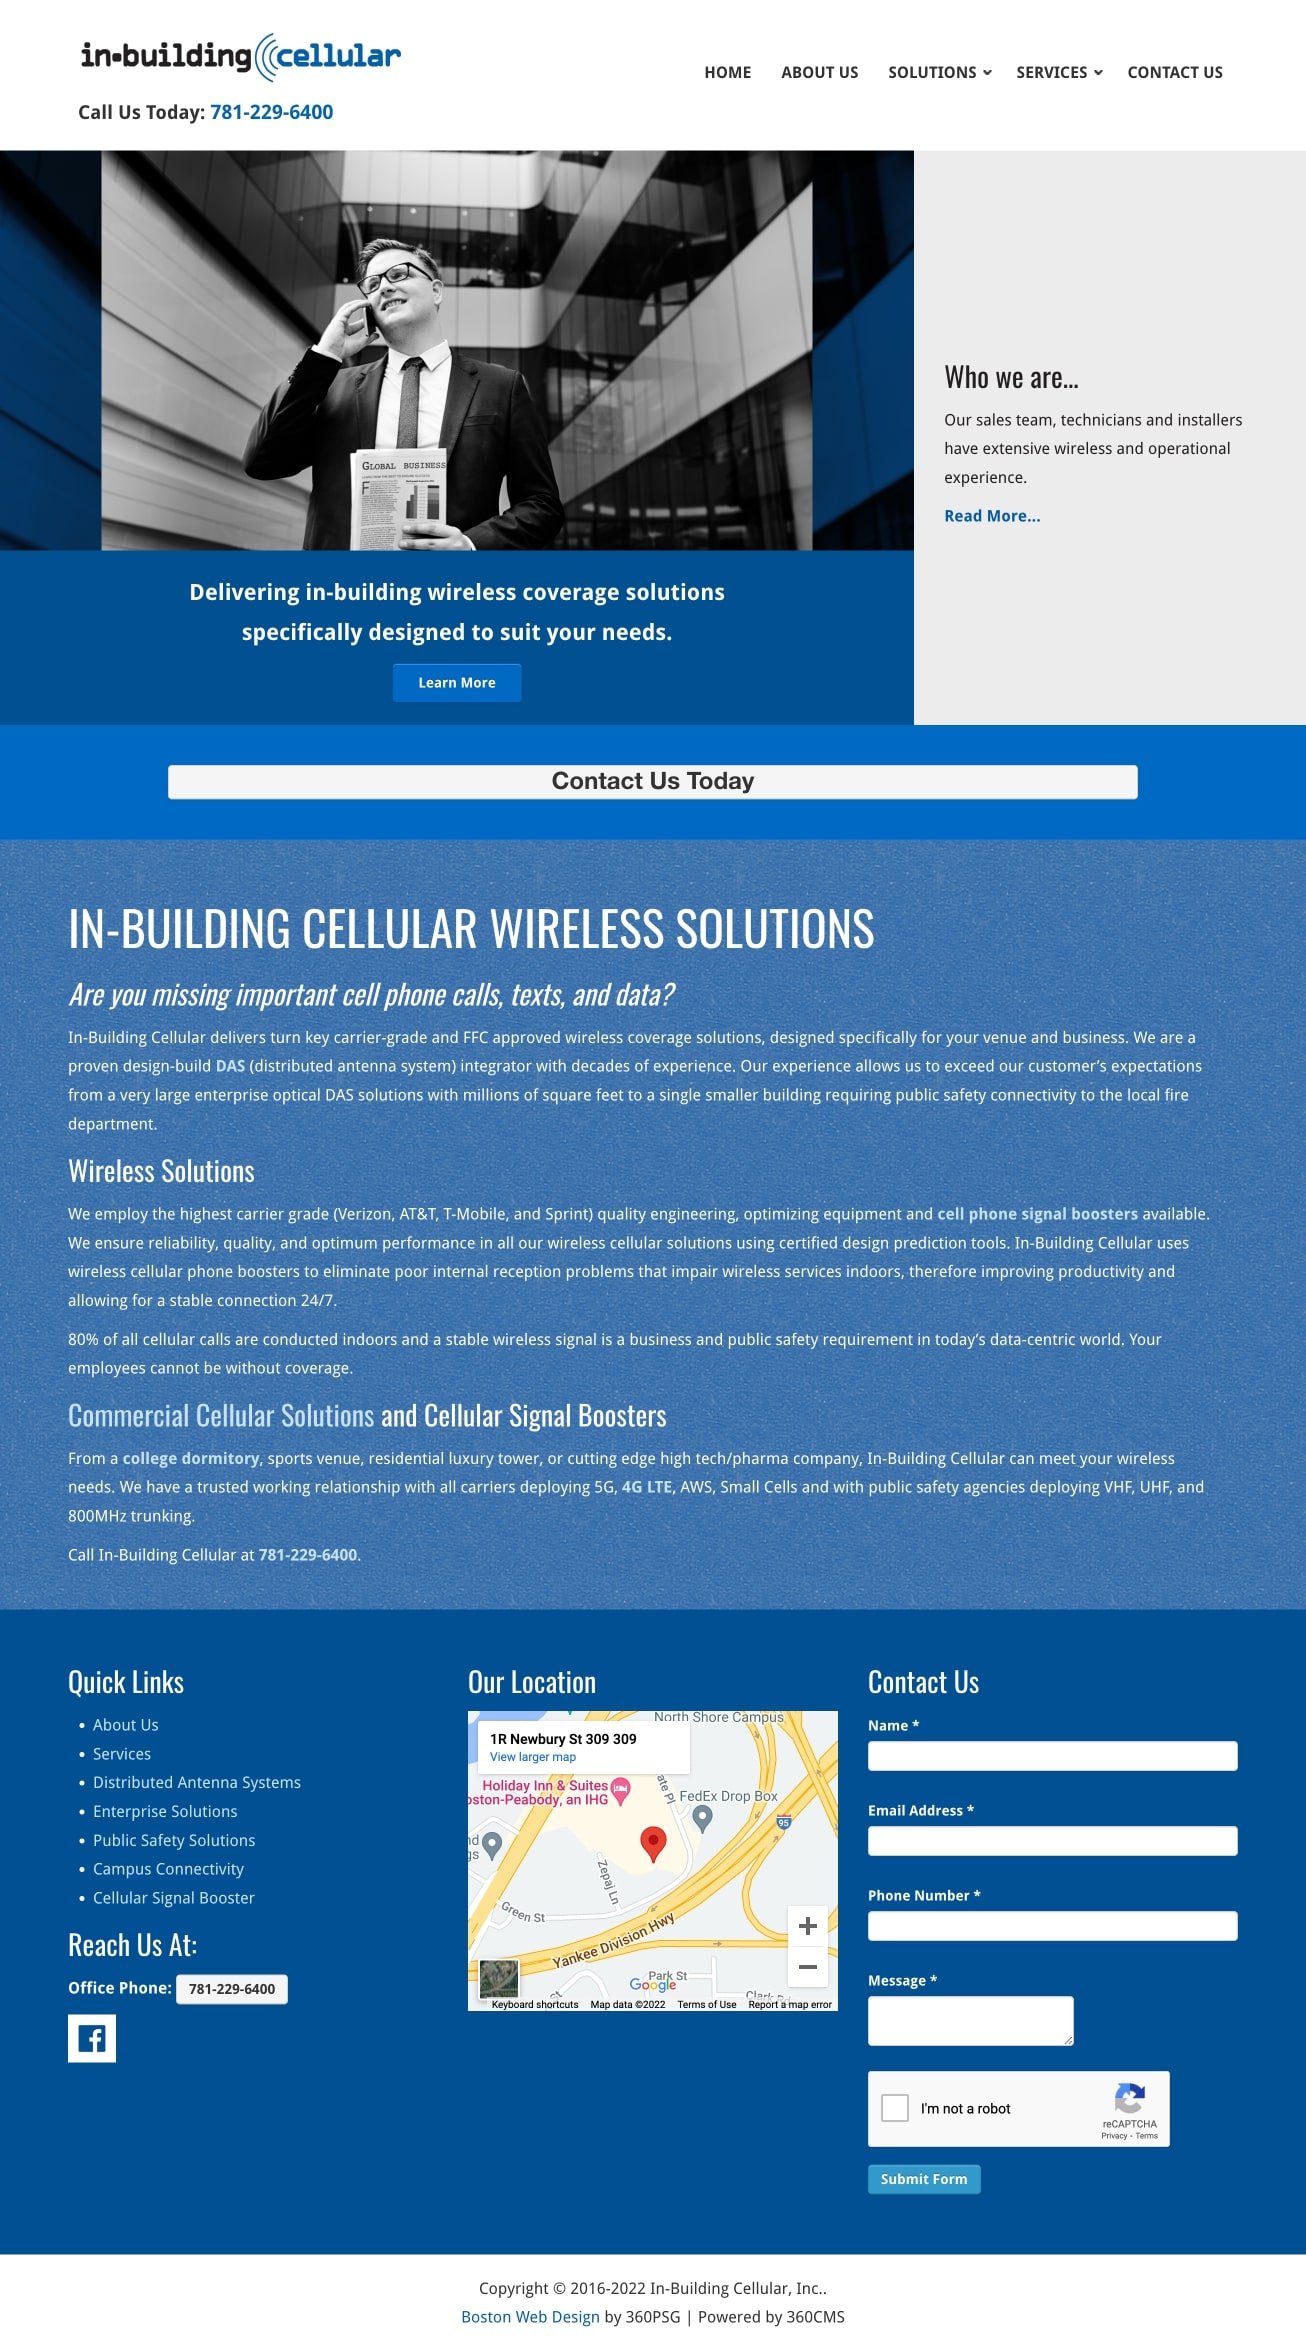 In-Building Cellular Website - Desktop